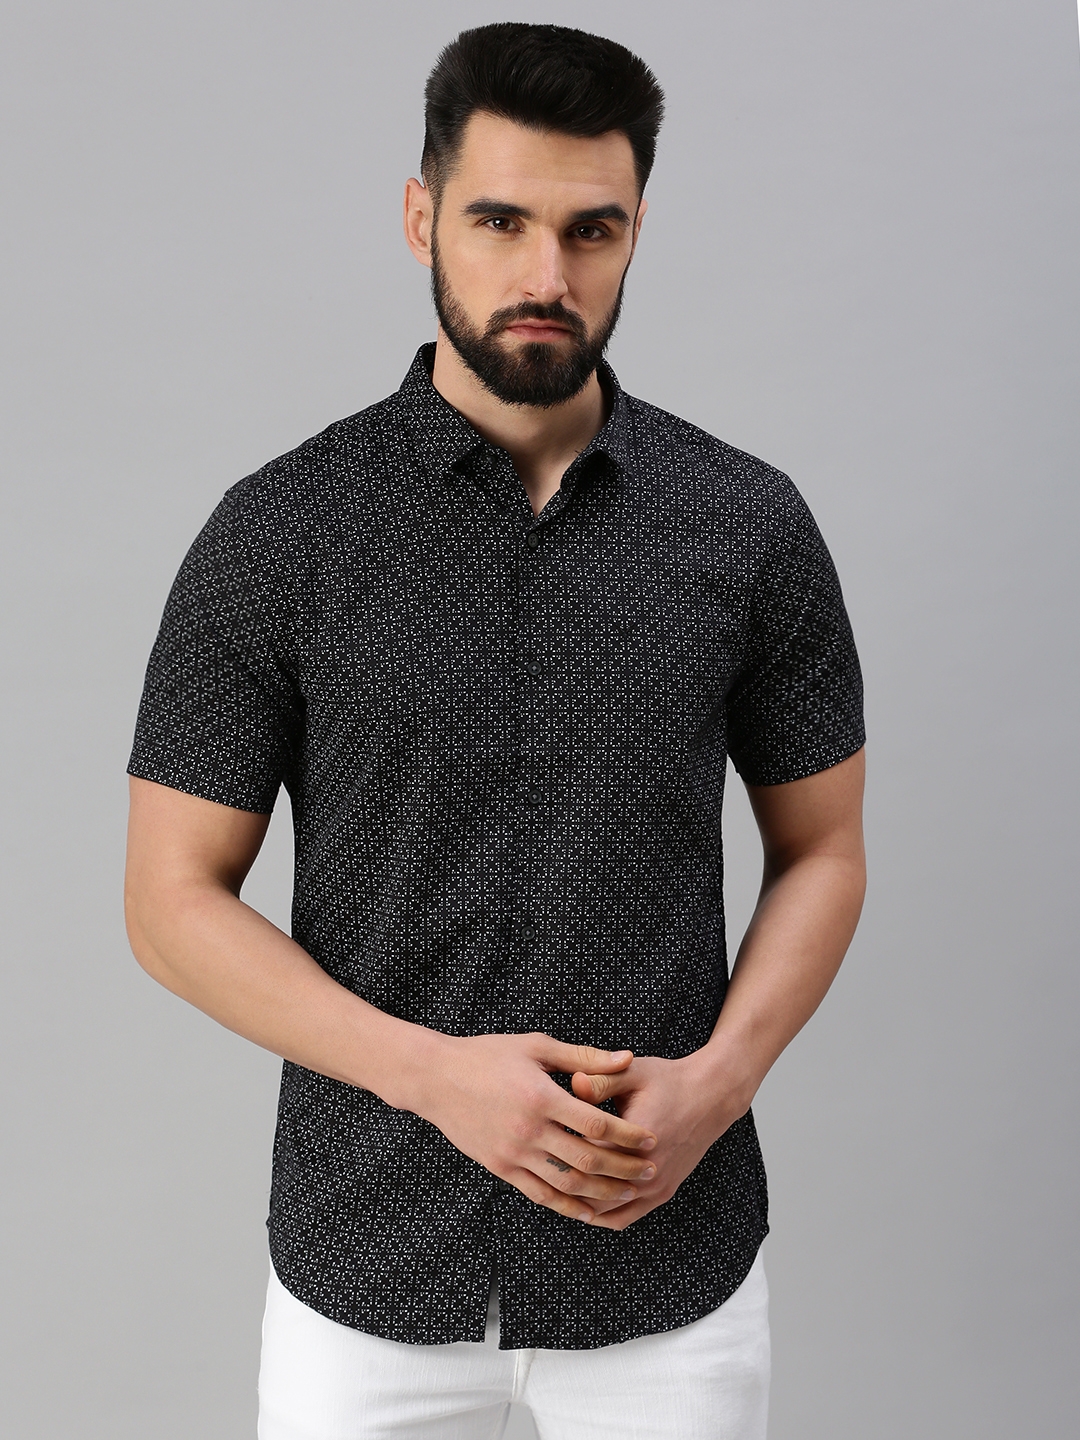 Men's Black Cotton Printed Casual Shirts